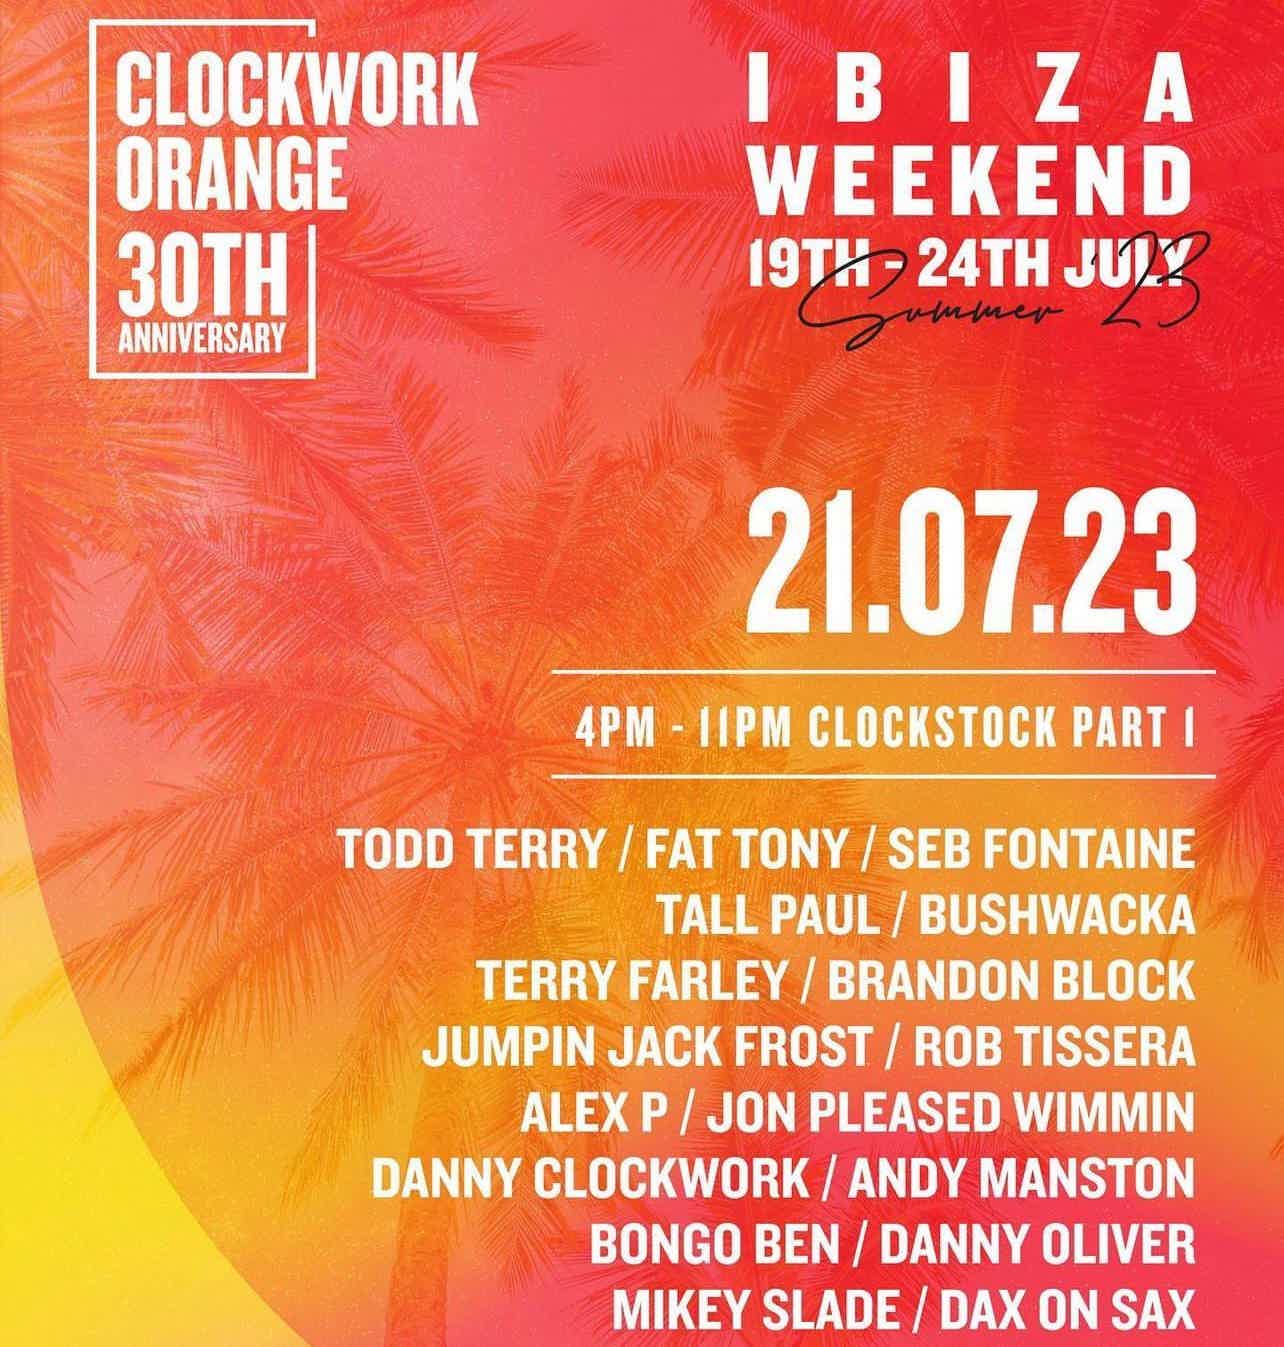 COVA SANTA party Clockstock Part 1 by Clockwork Orange tickets and info, party calendar Cova Santa club ibiza